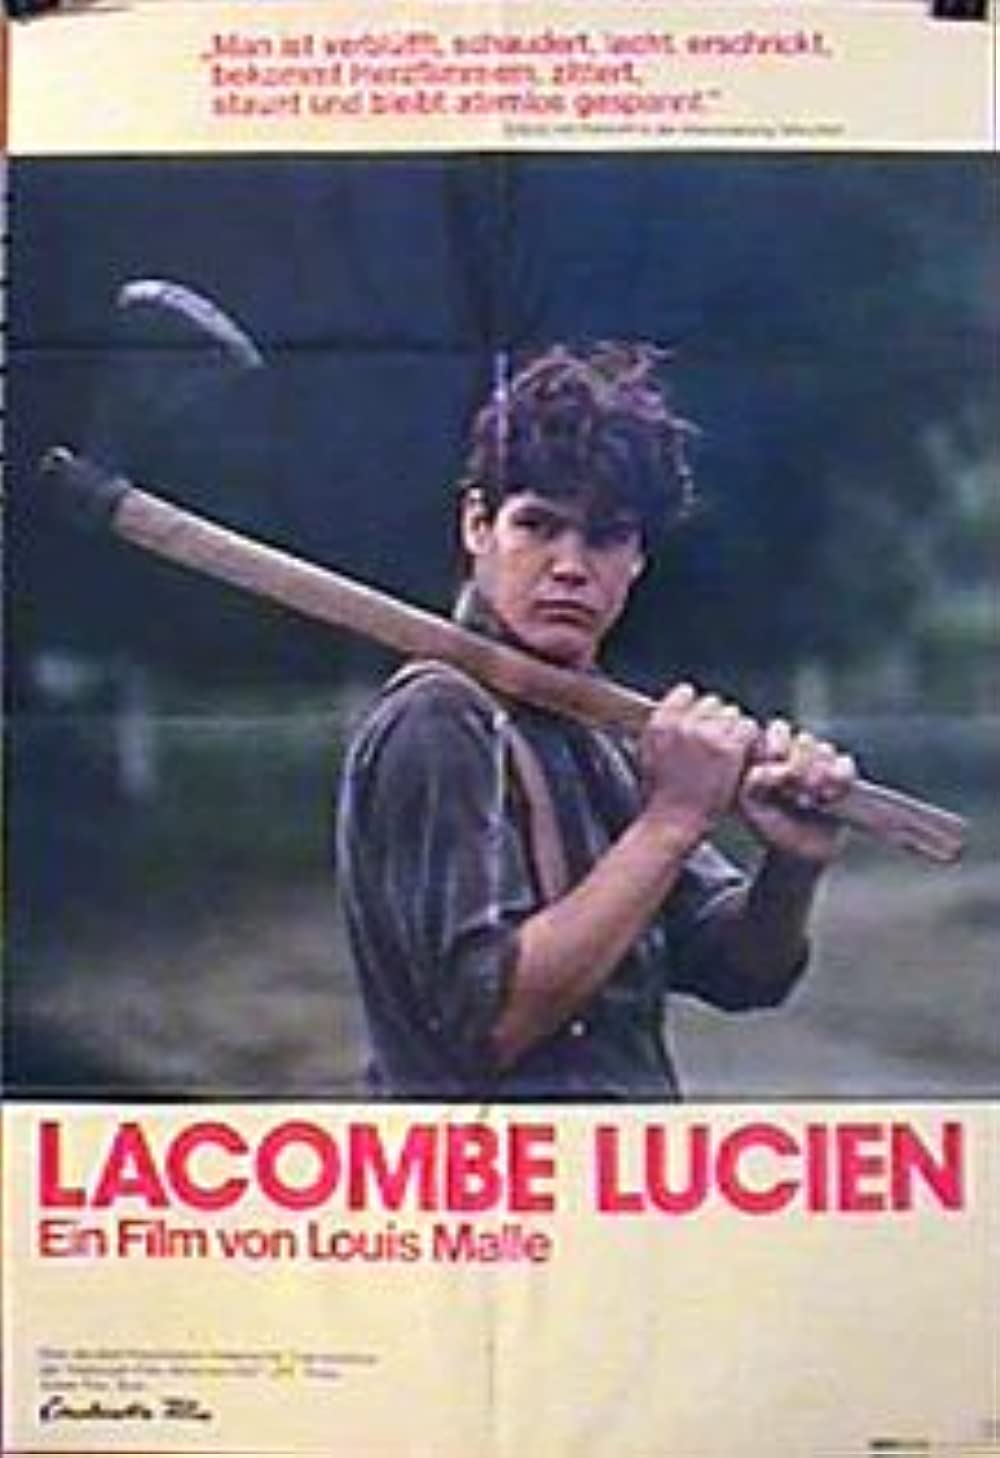 Filmbeschreibung zu Lacombe Lucien